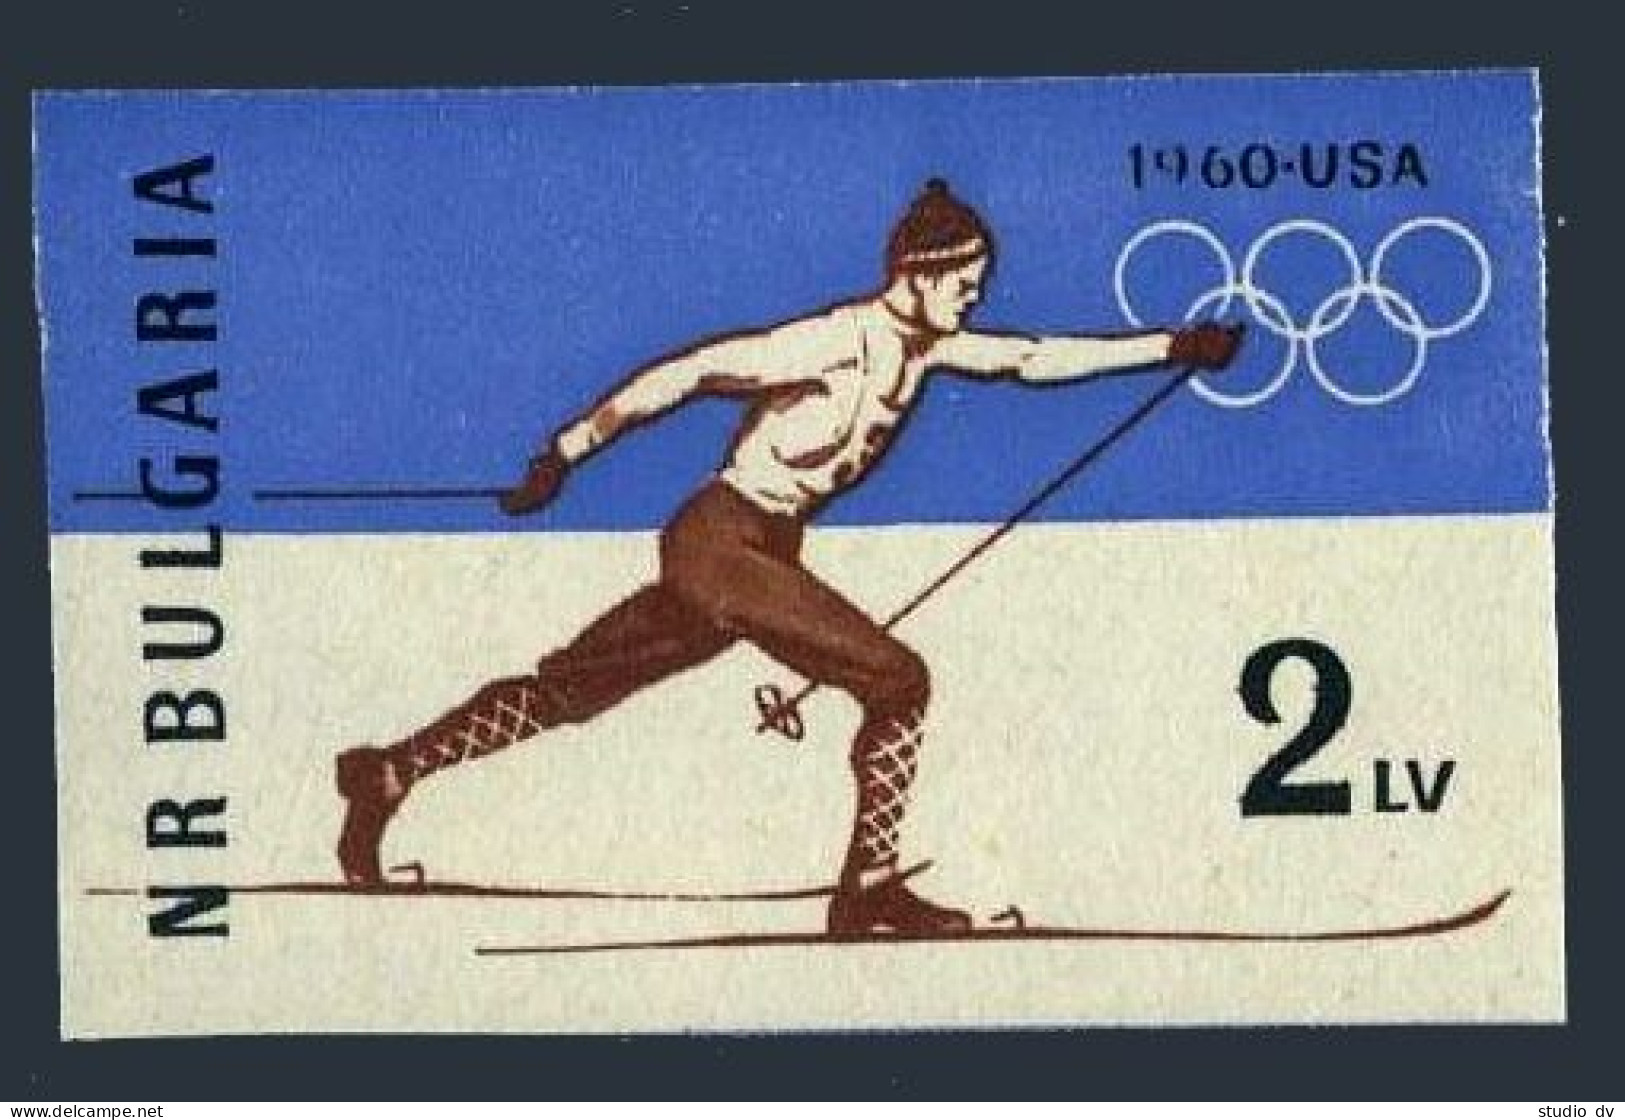 Bulgaria 1094 Imperf, MNH. Michel 1153B. Olympics Squaw Valley-1960. Skier. - Neufs